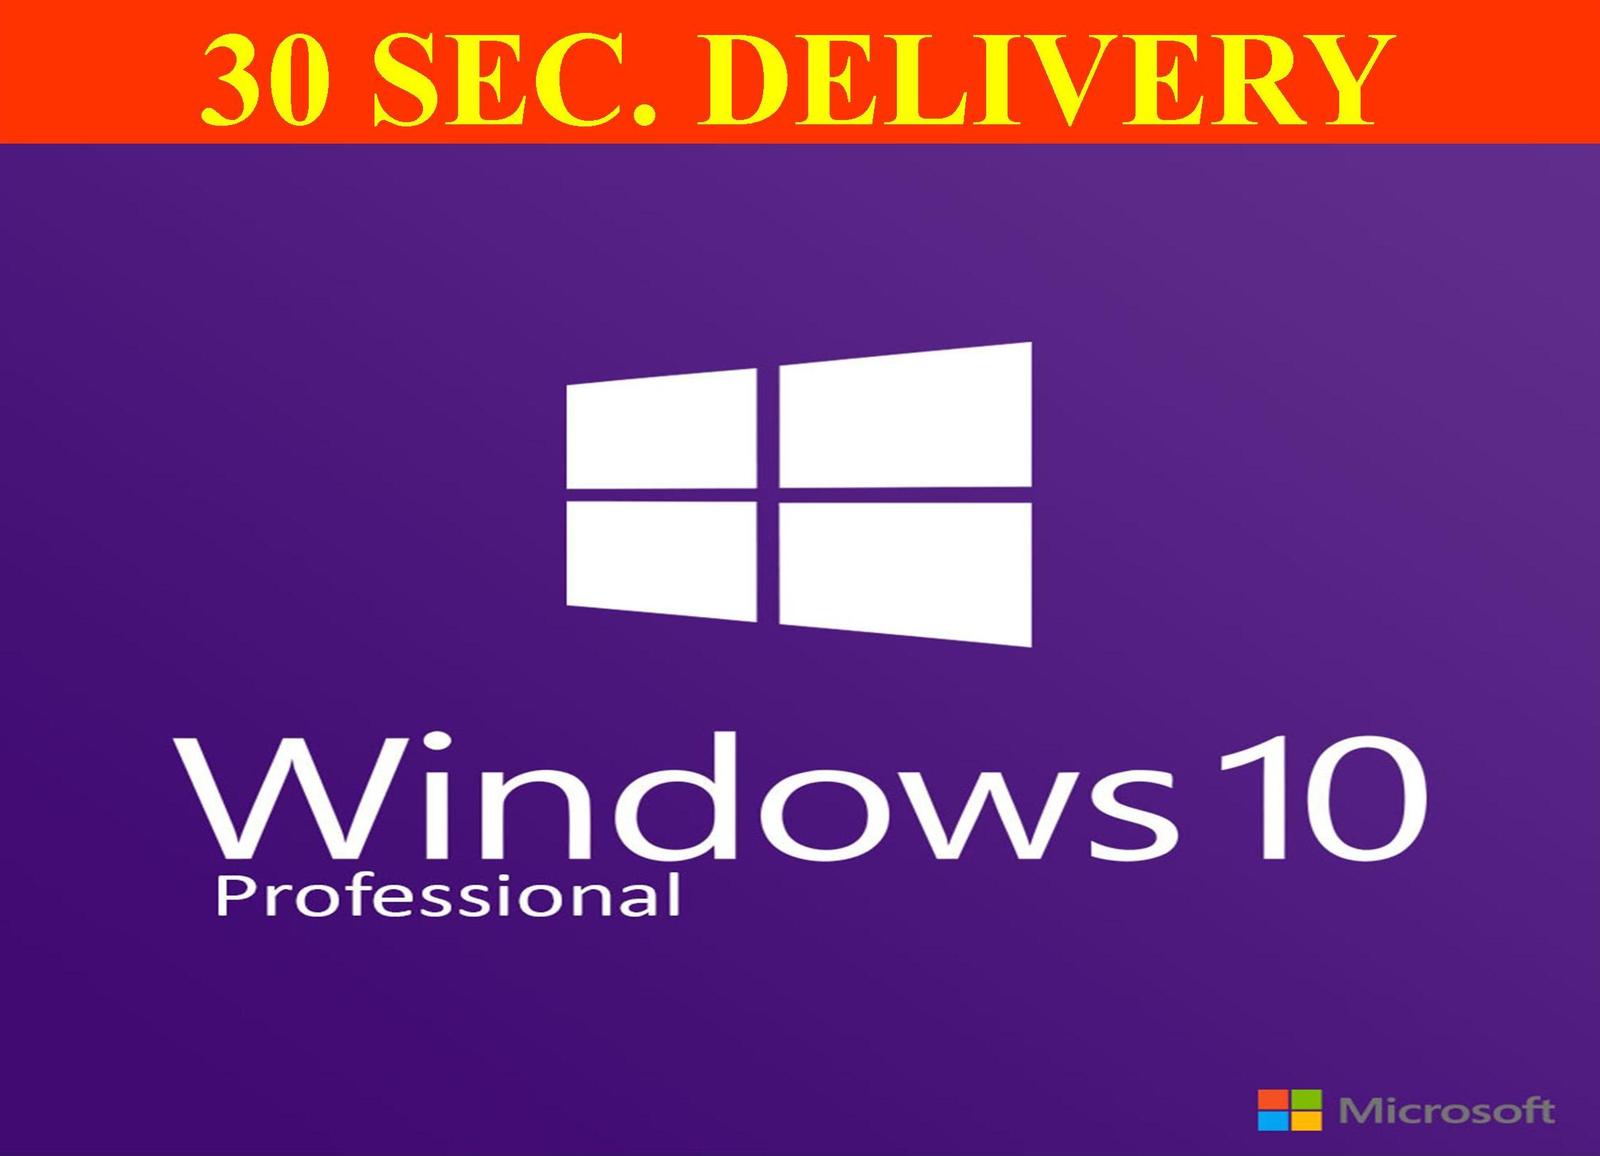 key windows 10 pro 32 bits